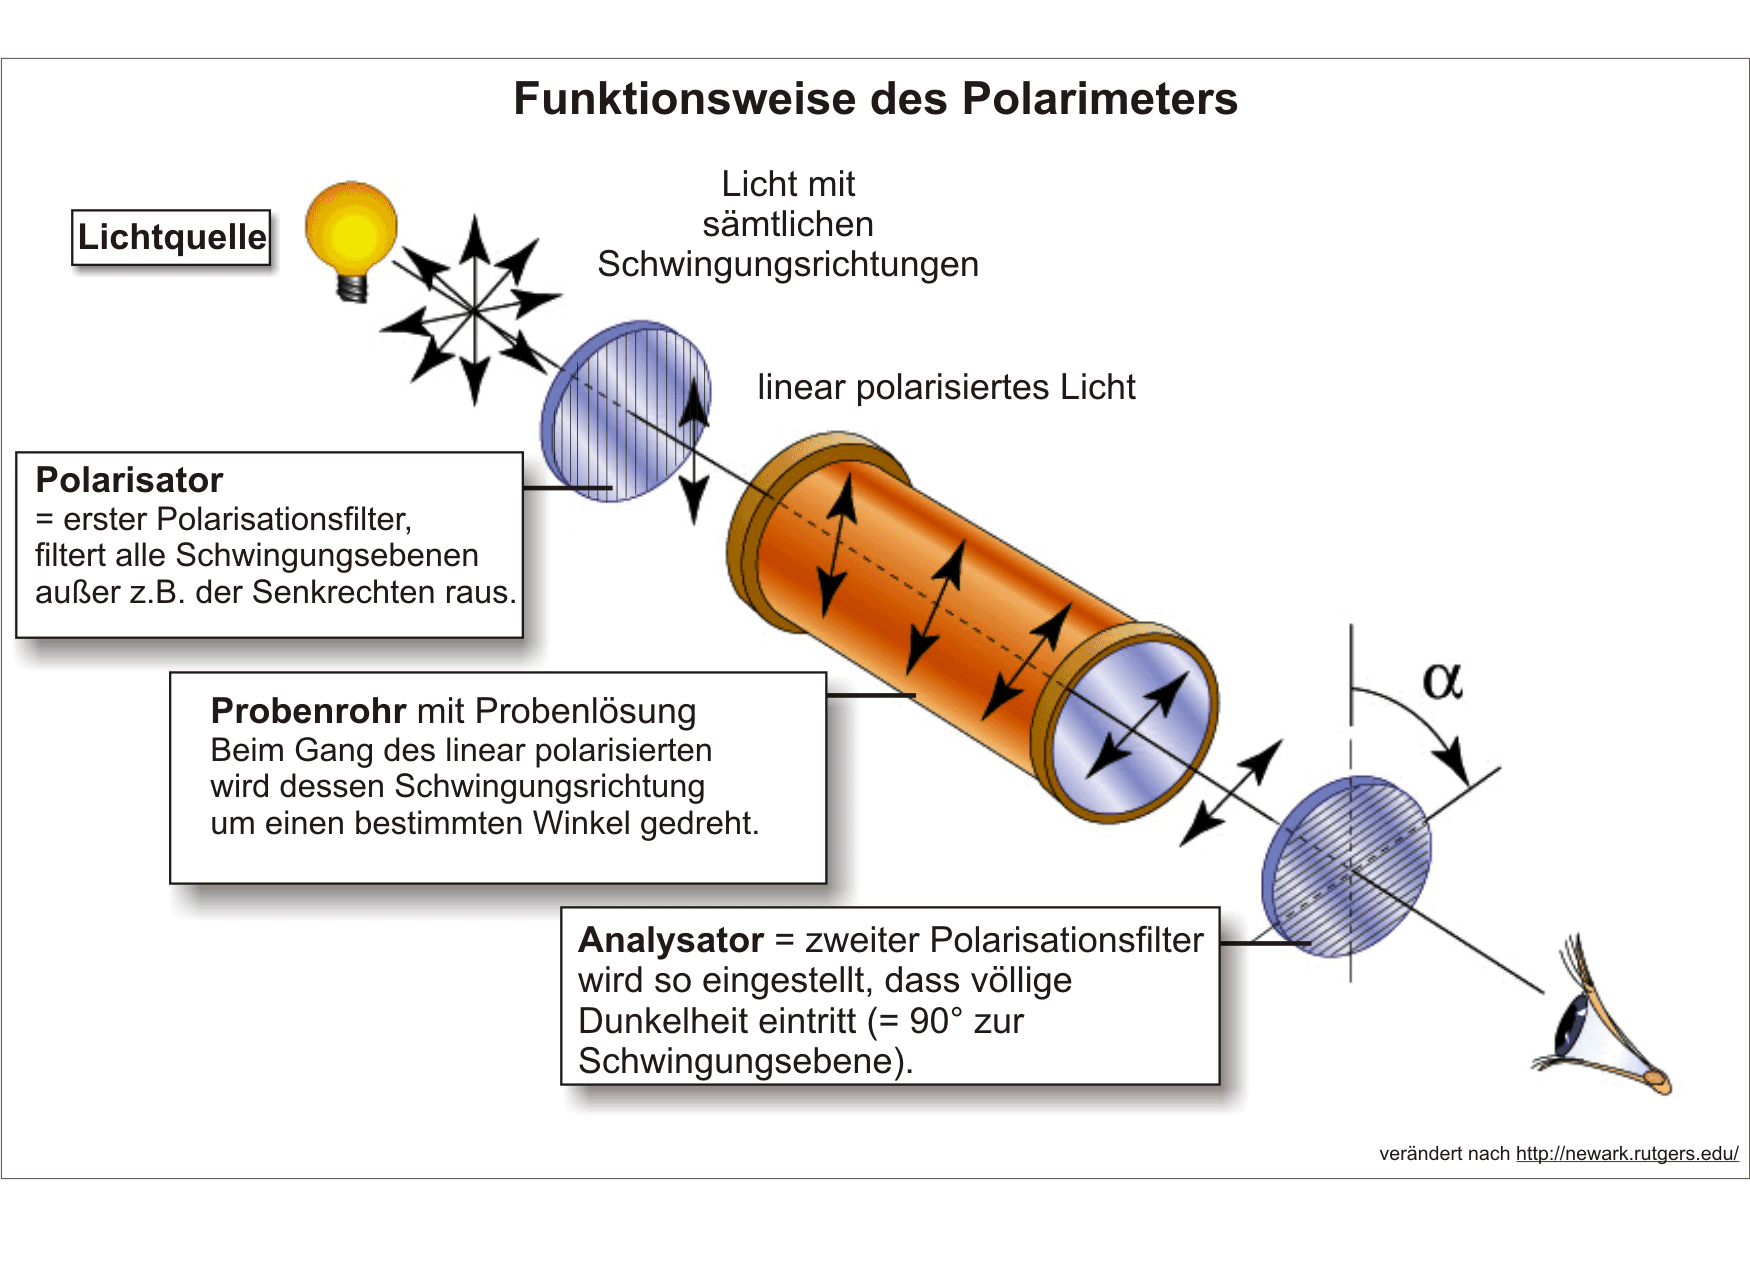 Funktionsweise eines Polarimeters